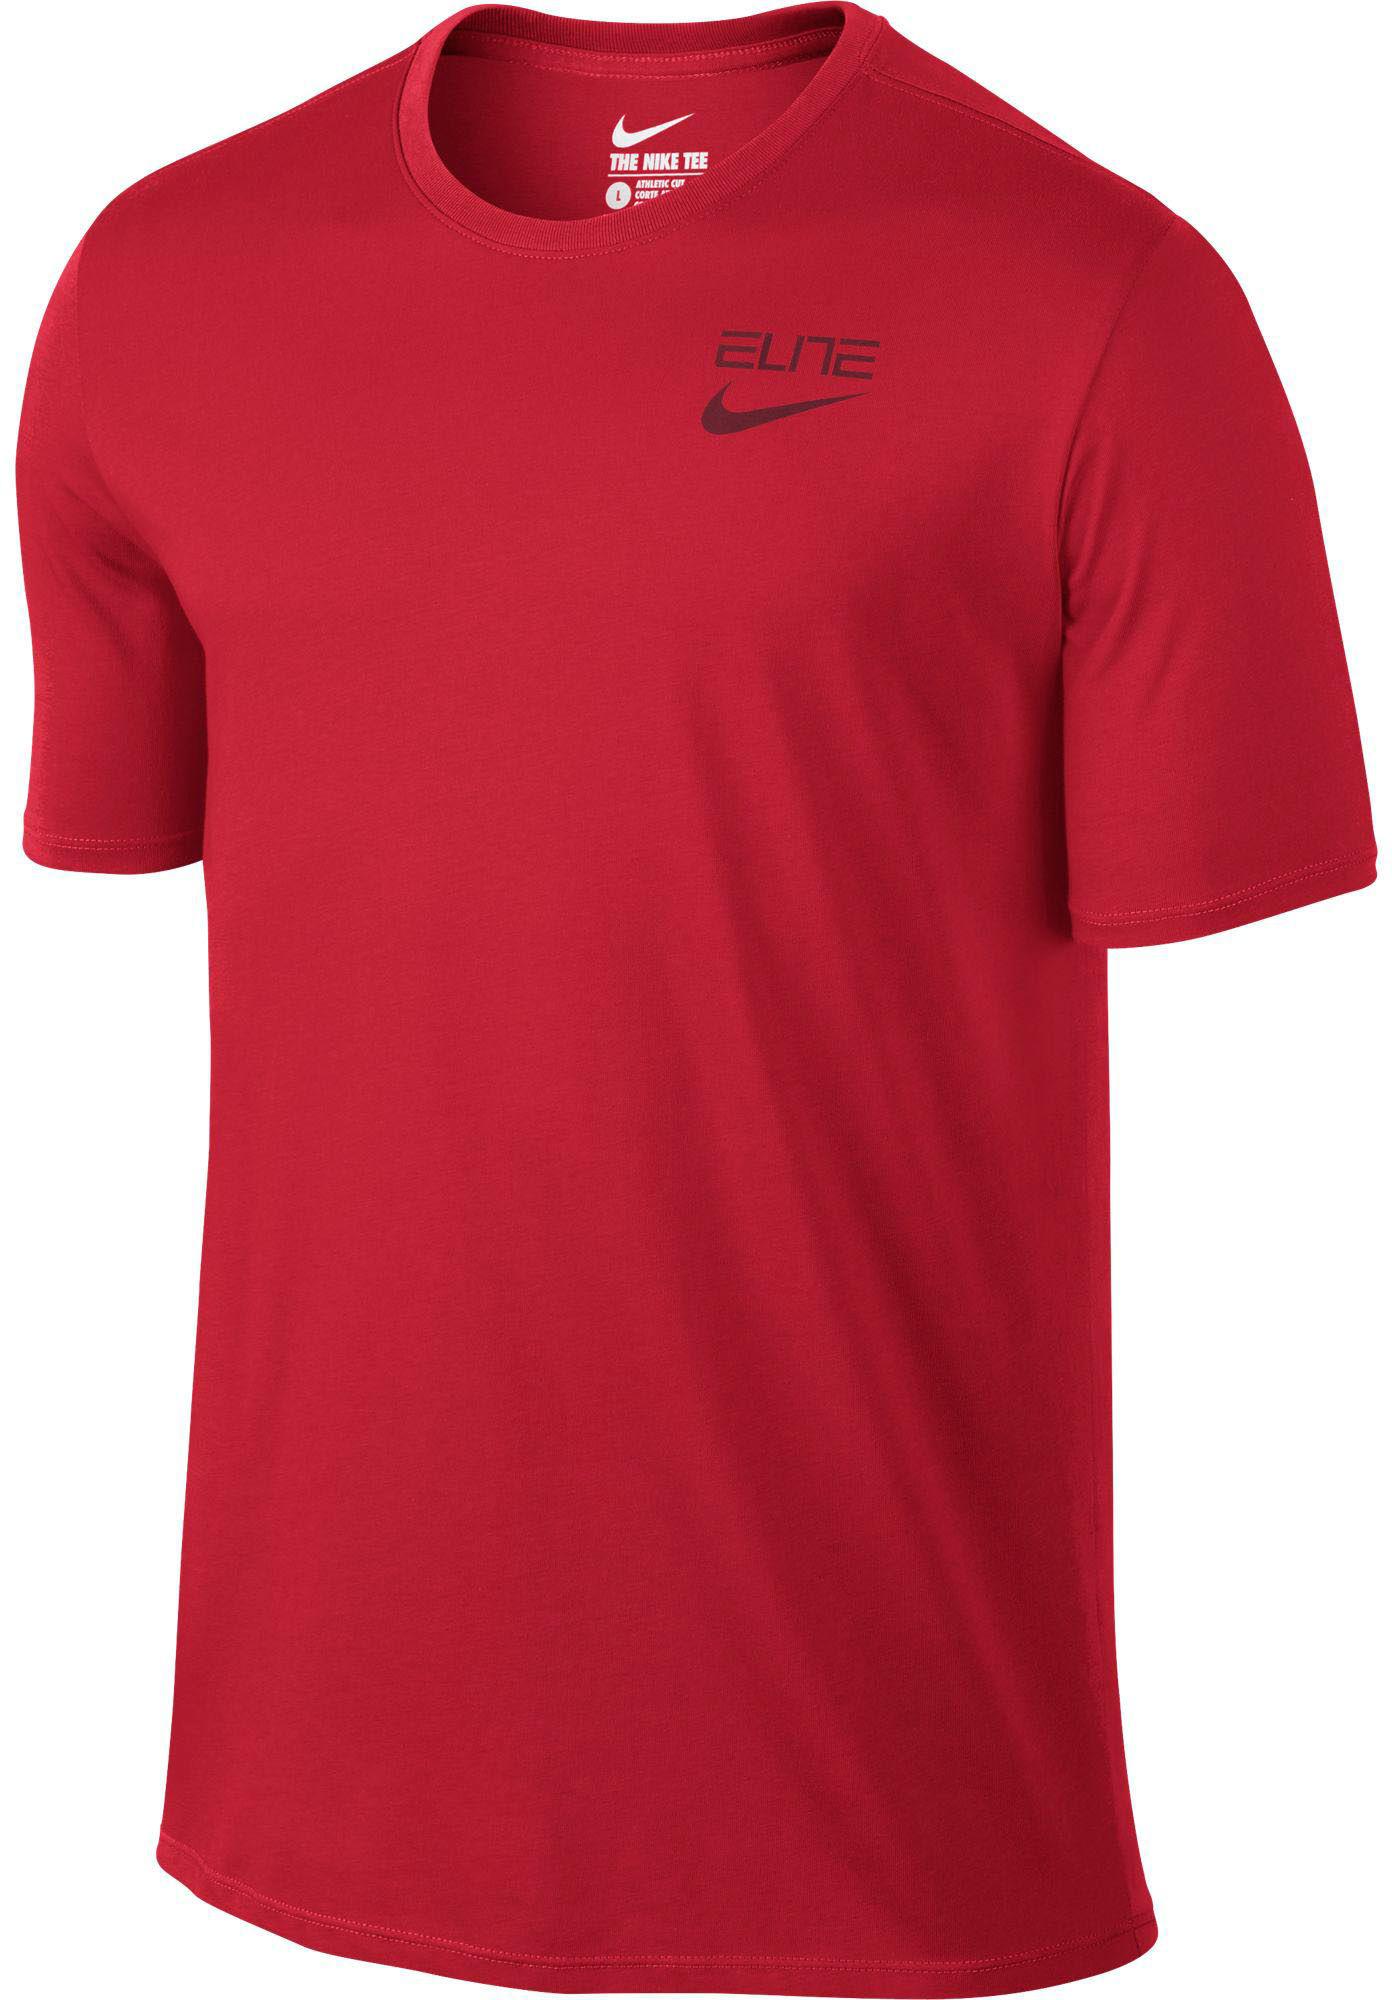 Nike Elite Back Stripe Graphic Basketball T-shirt in Red for Men - Lyst